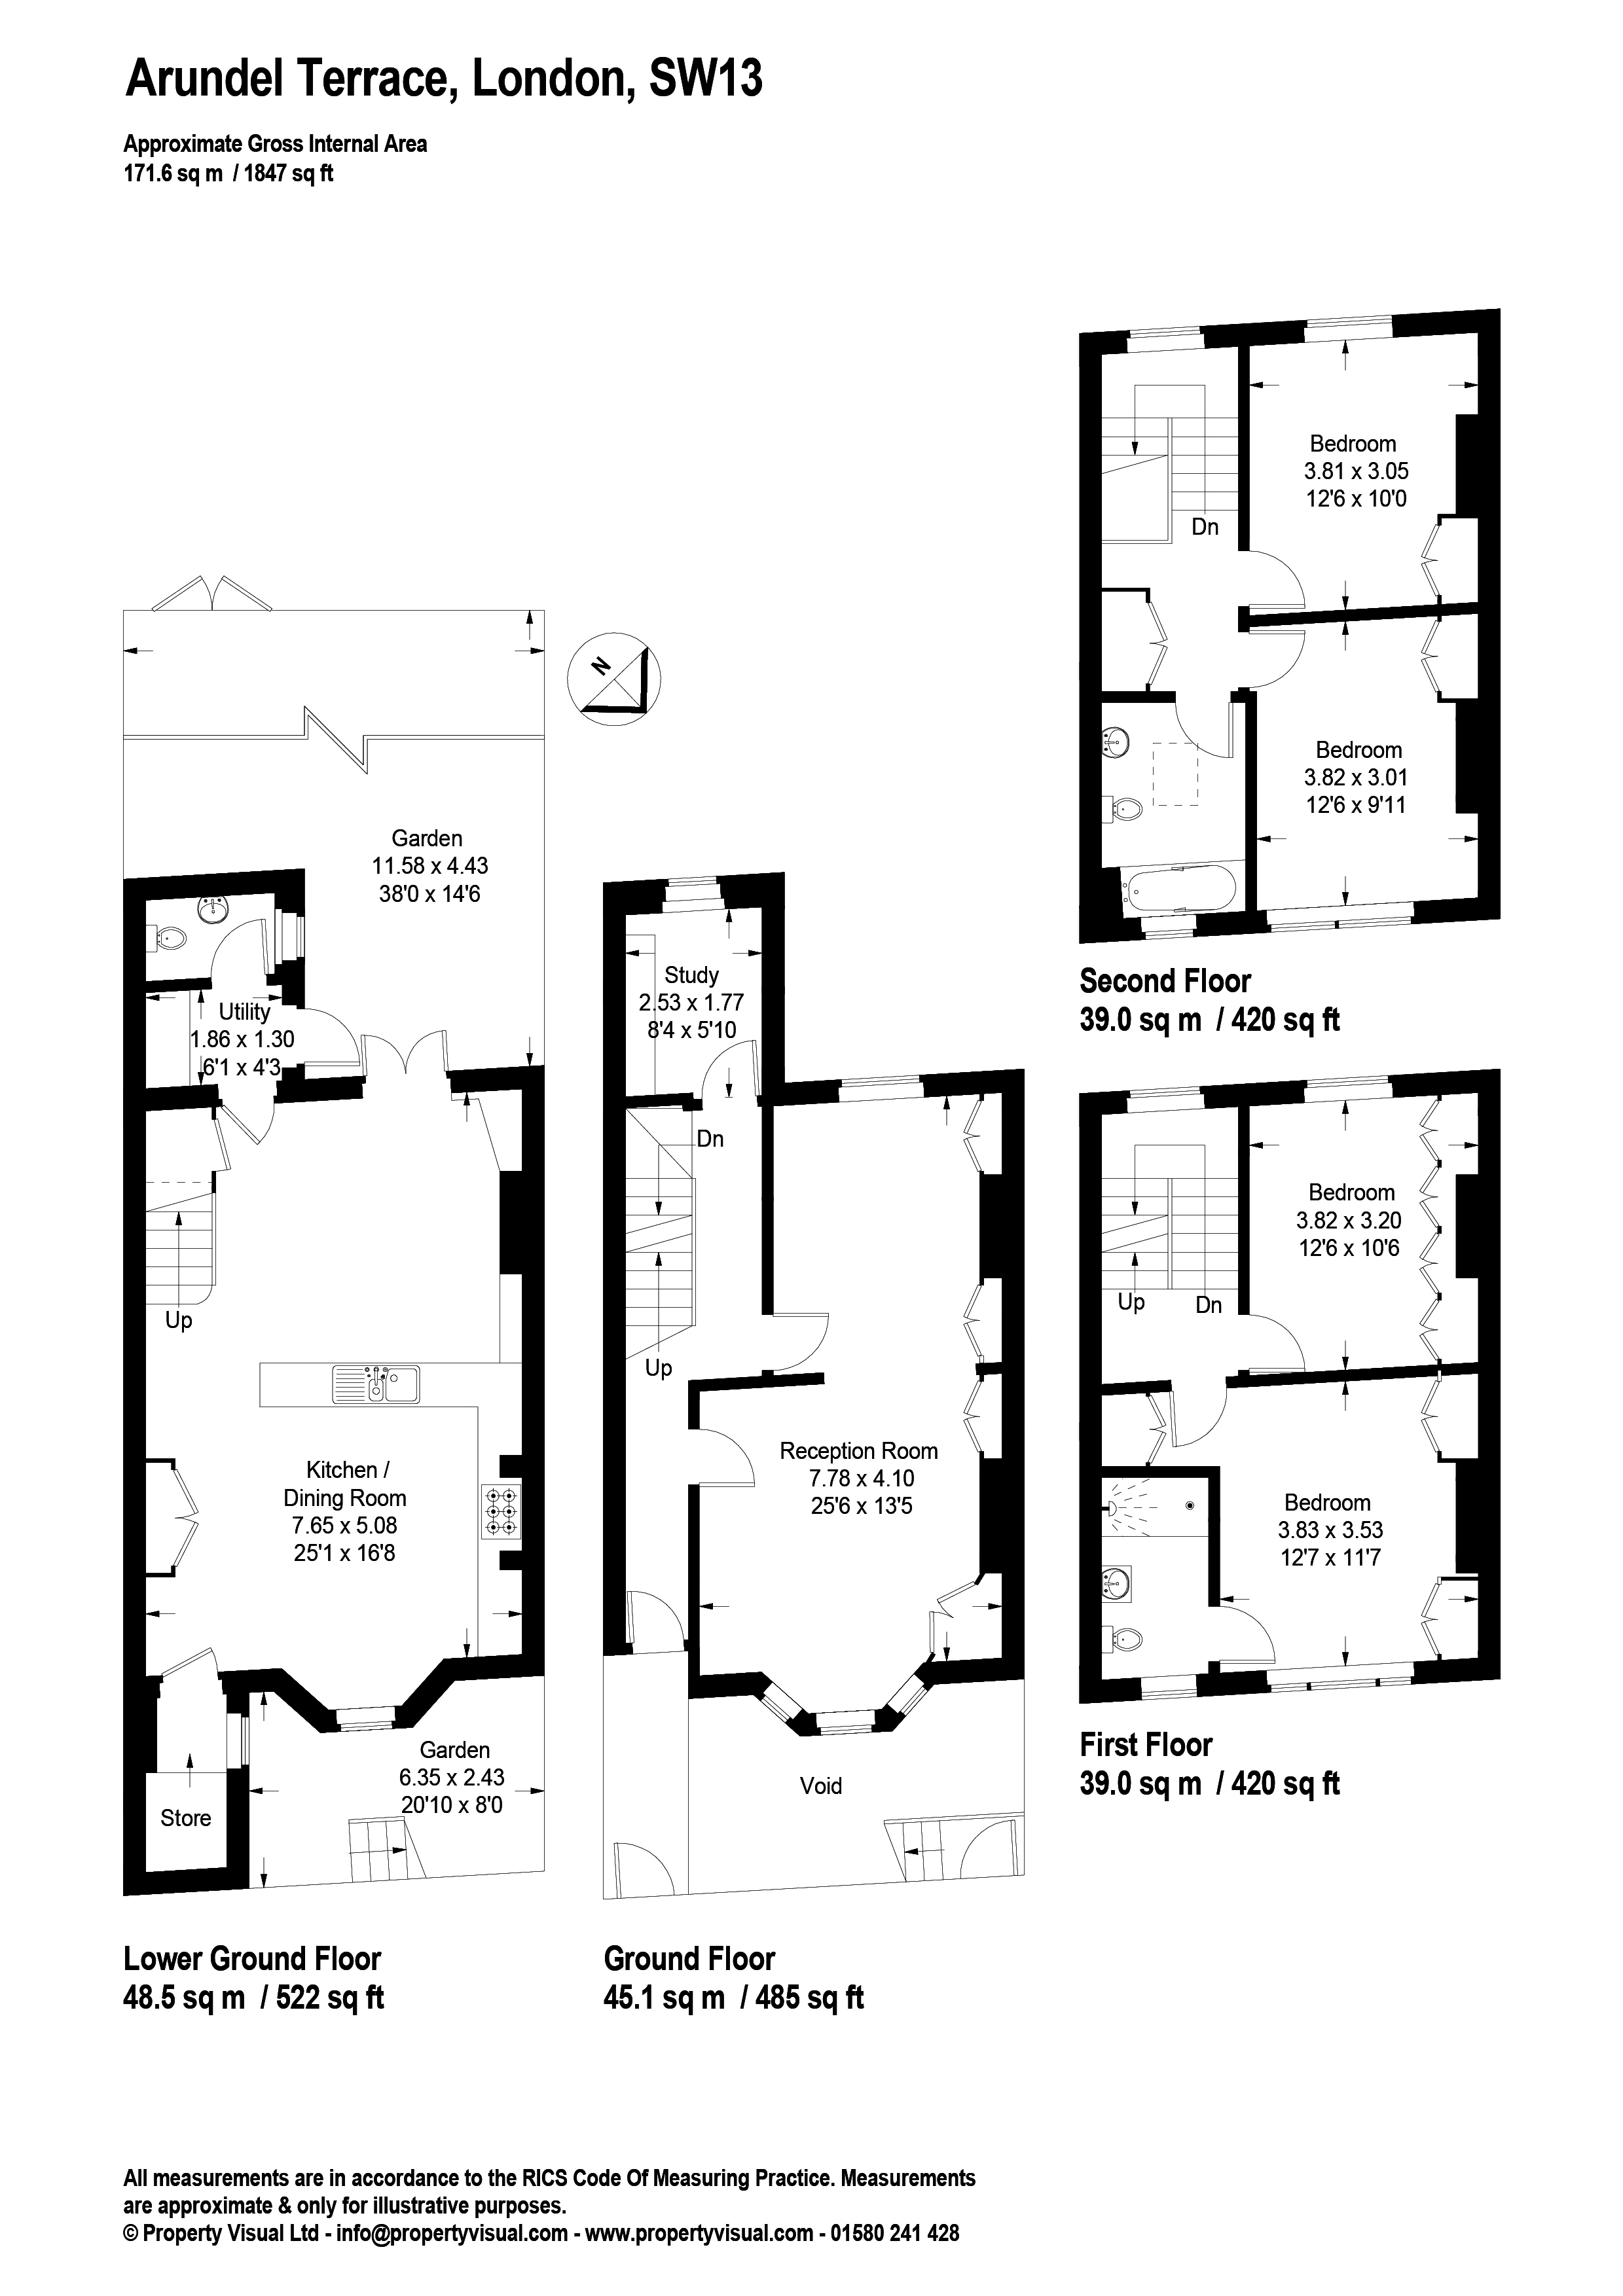 4 Bedrooms Detached house to rent in Arundel Terrace, London SW13